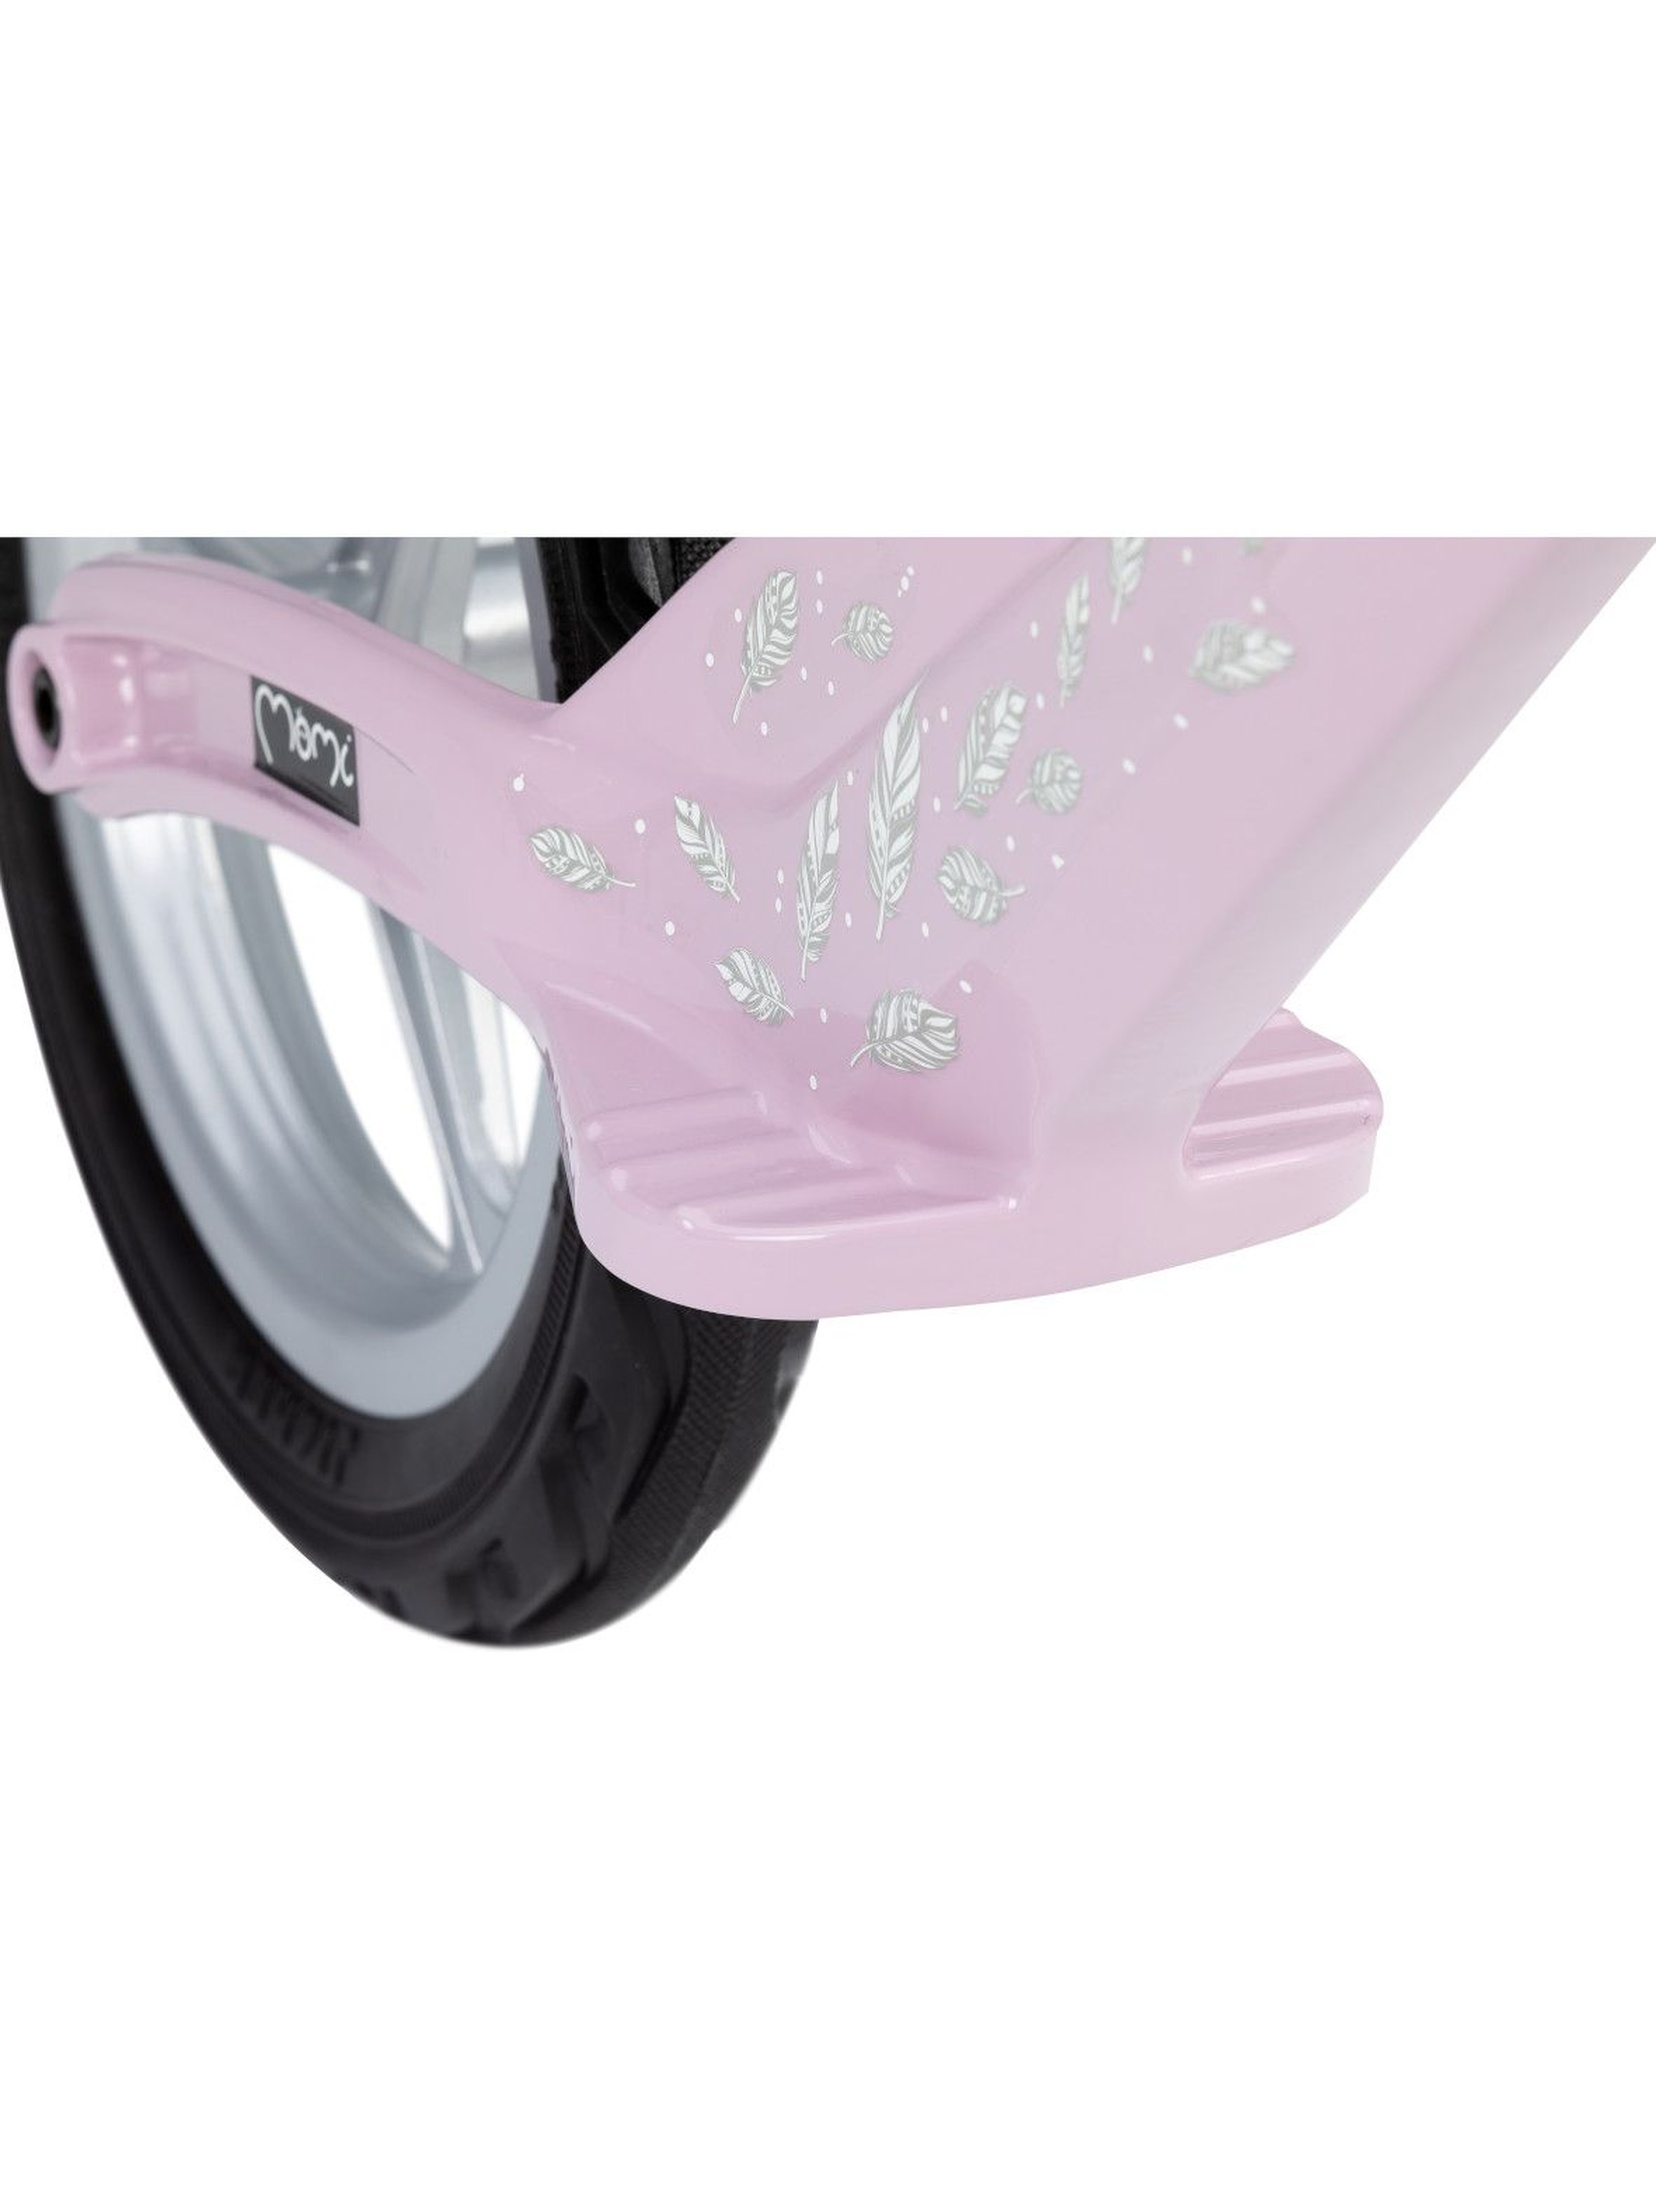 Ultralekki rowerek ze stopu magnezu MoMi ULTI różowy kwiaty